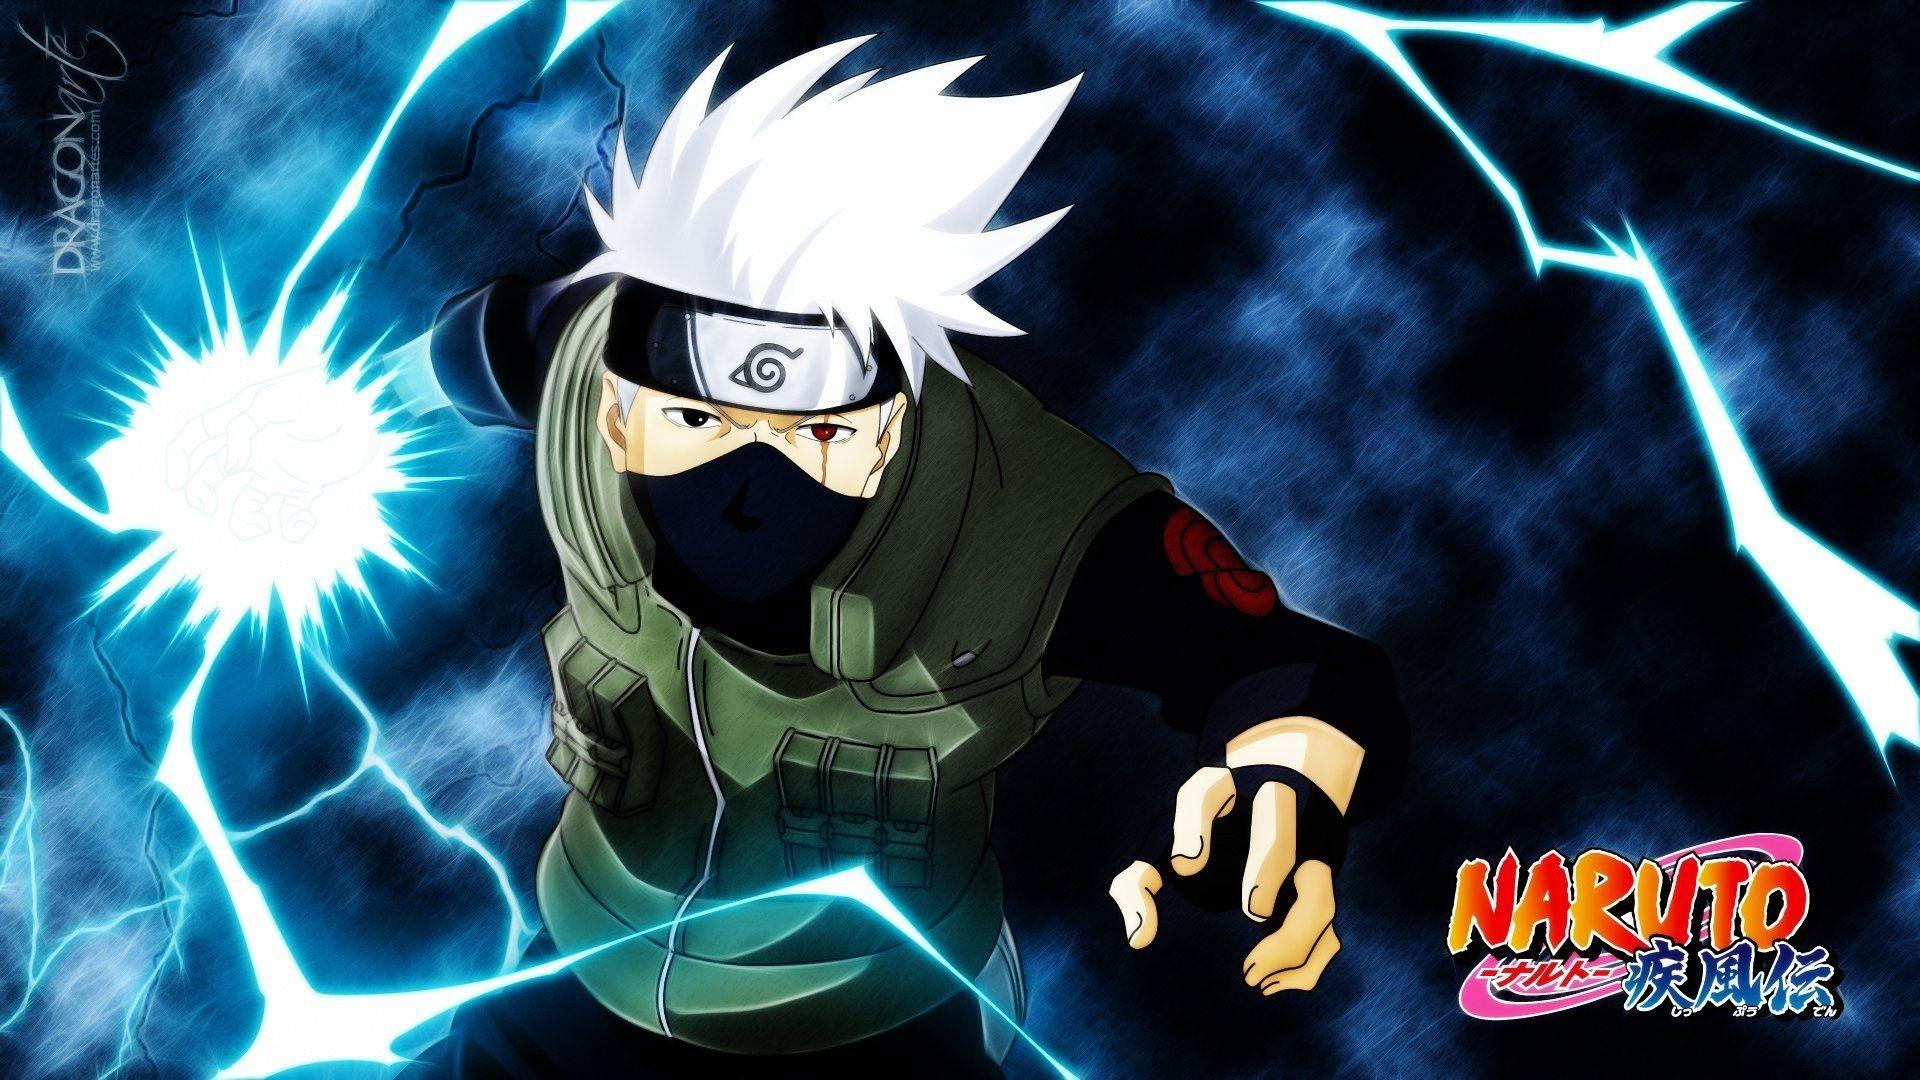 Naruto Kakashi Wallpaper background picture